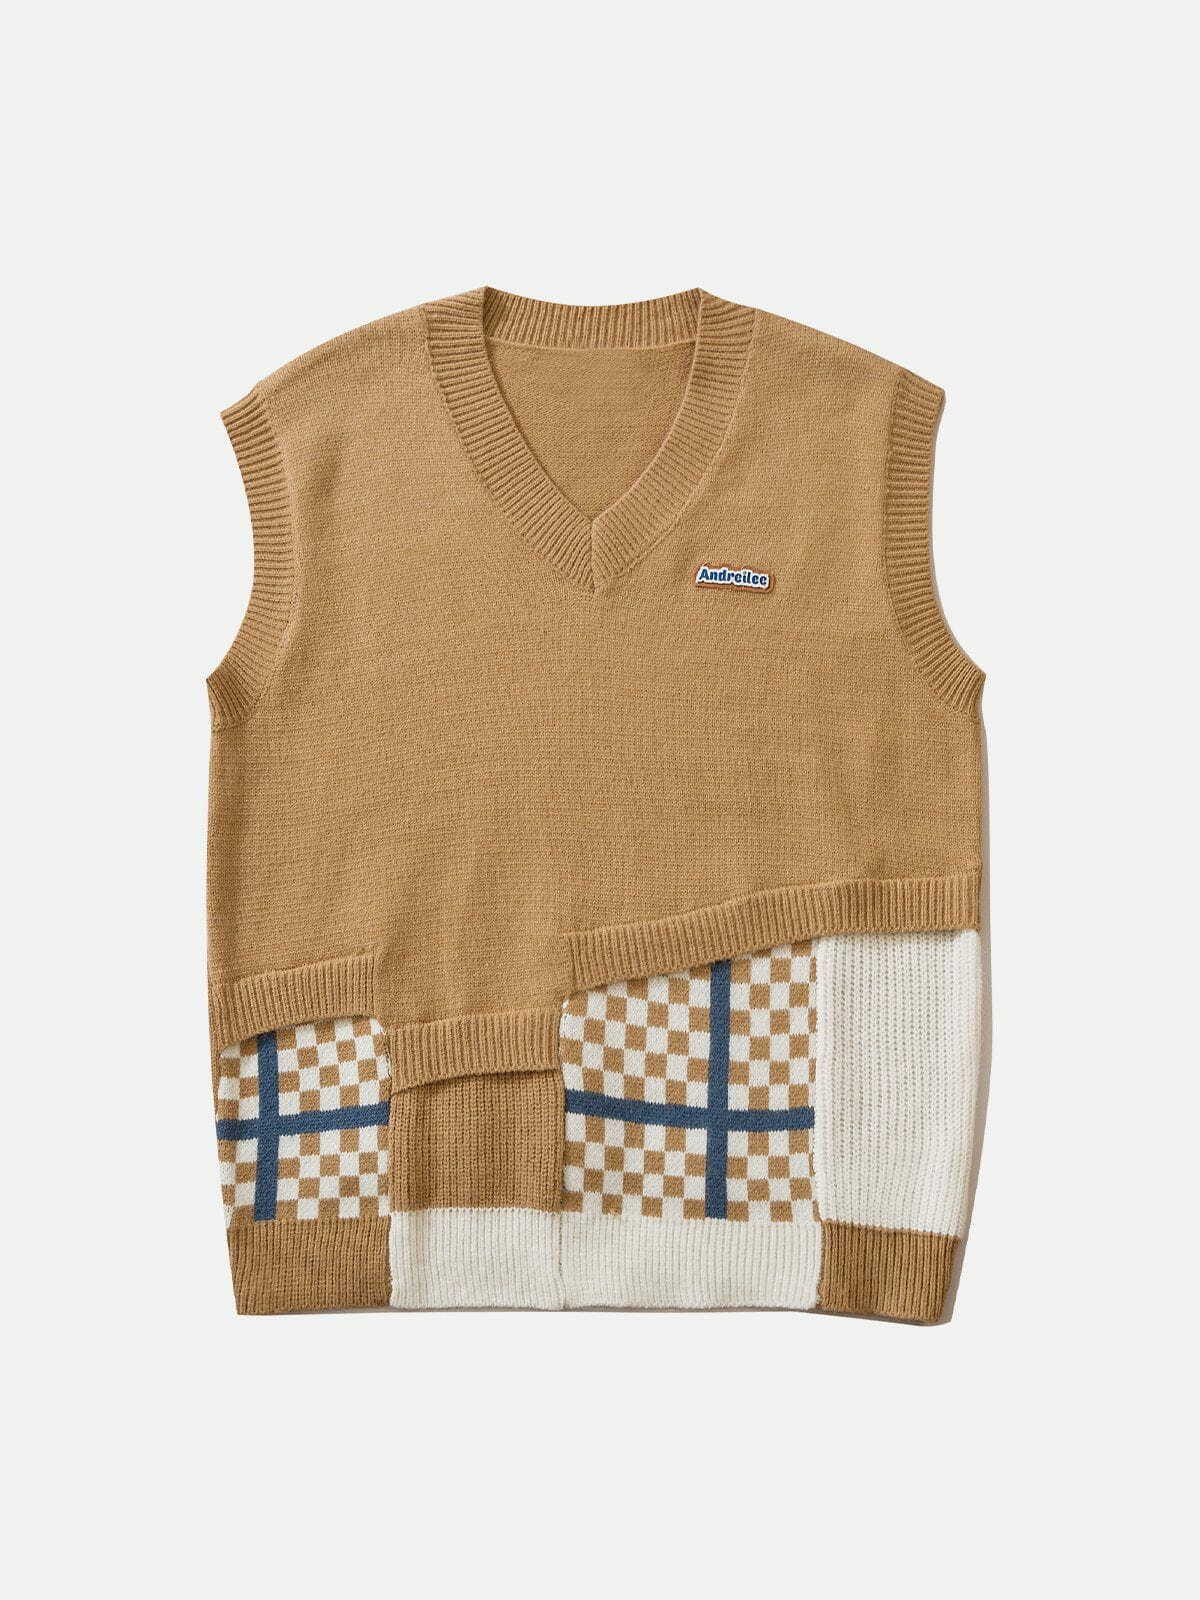 patchwork plaid sweater vest edgy & retro streetwear essential 4884